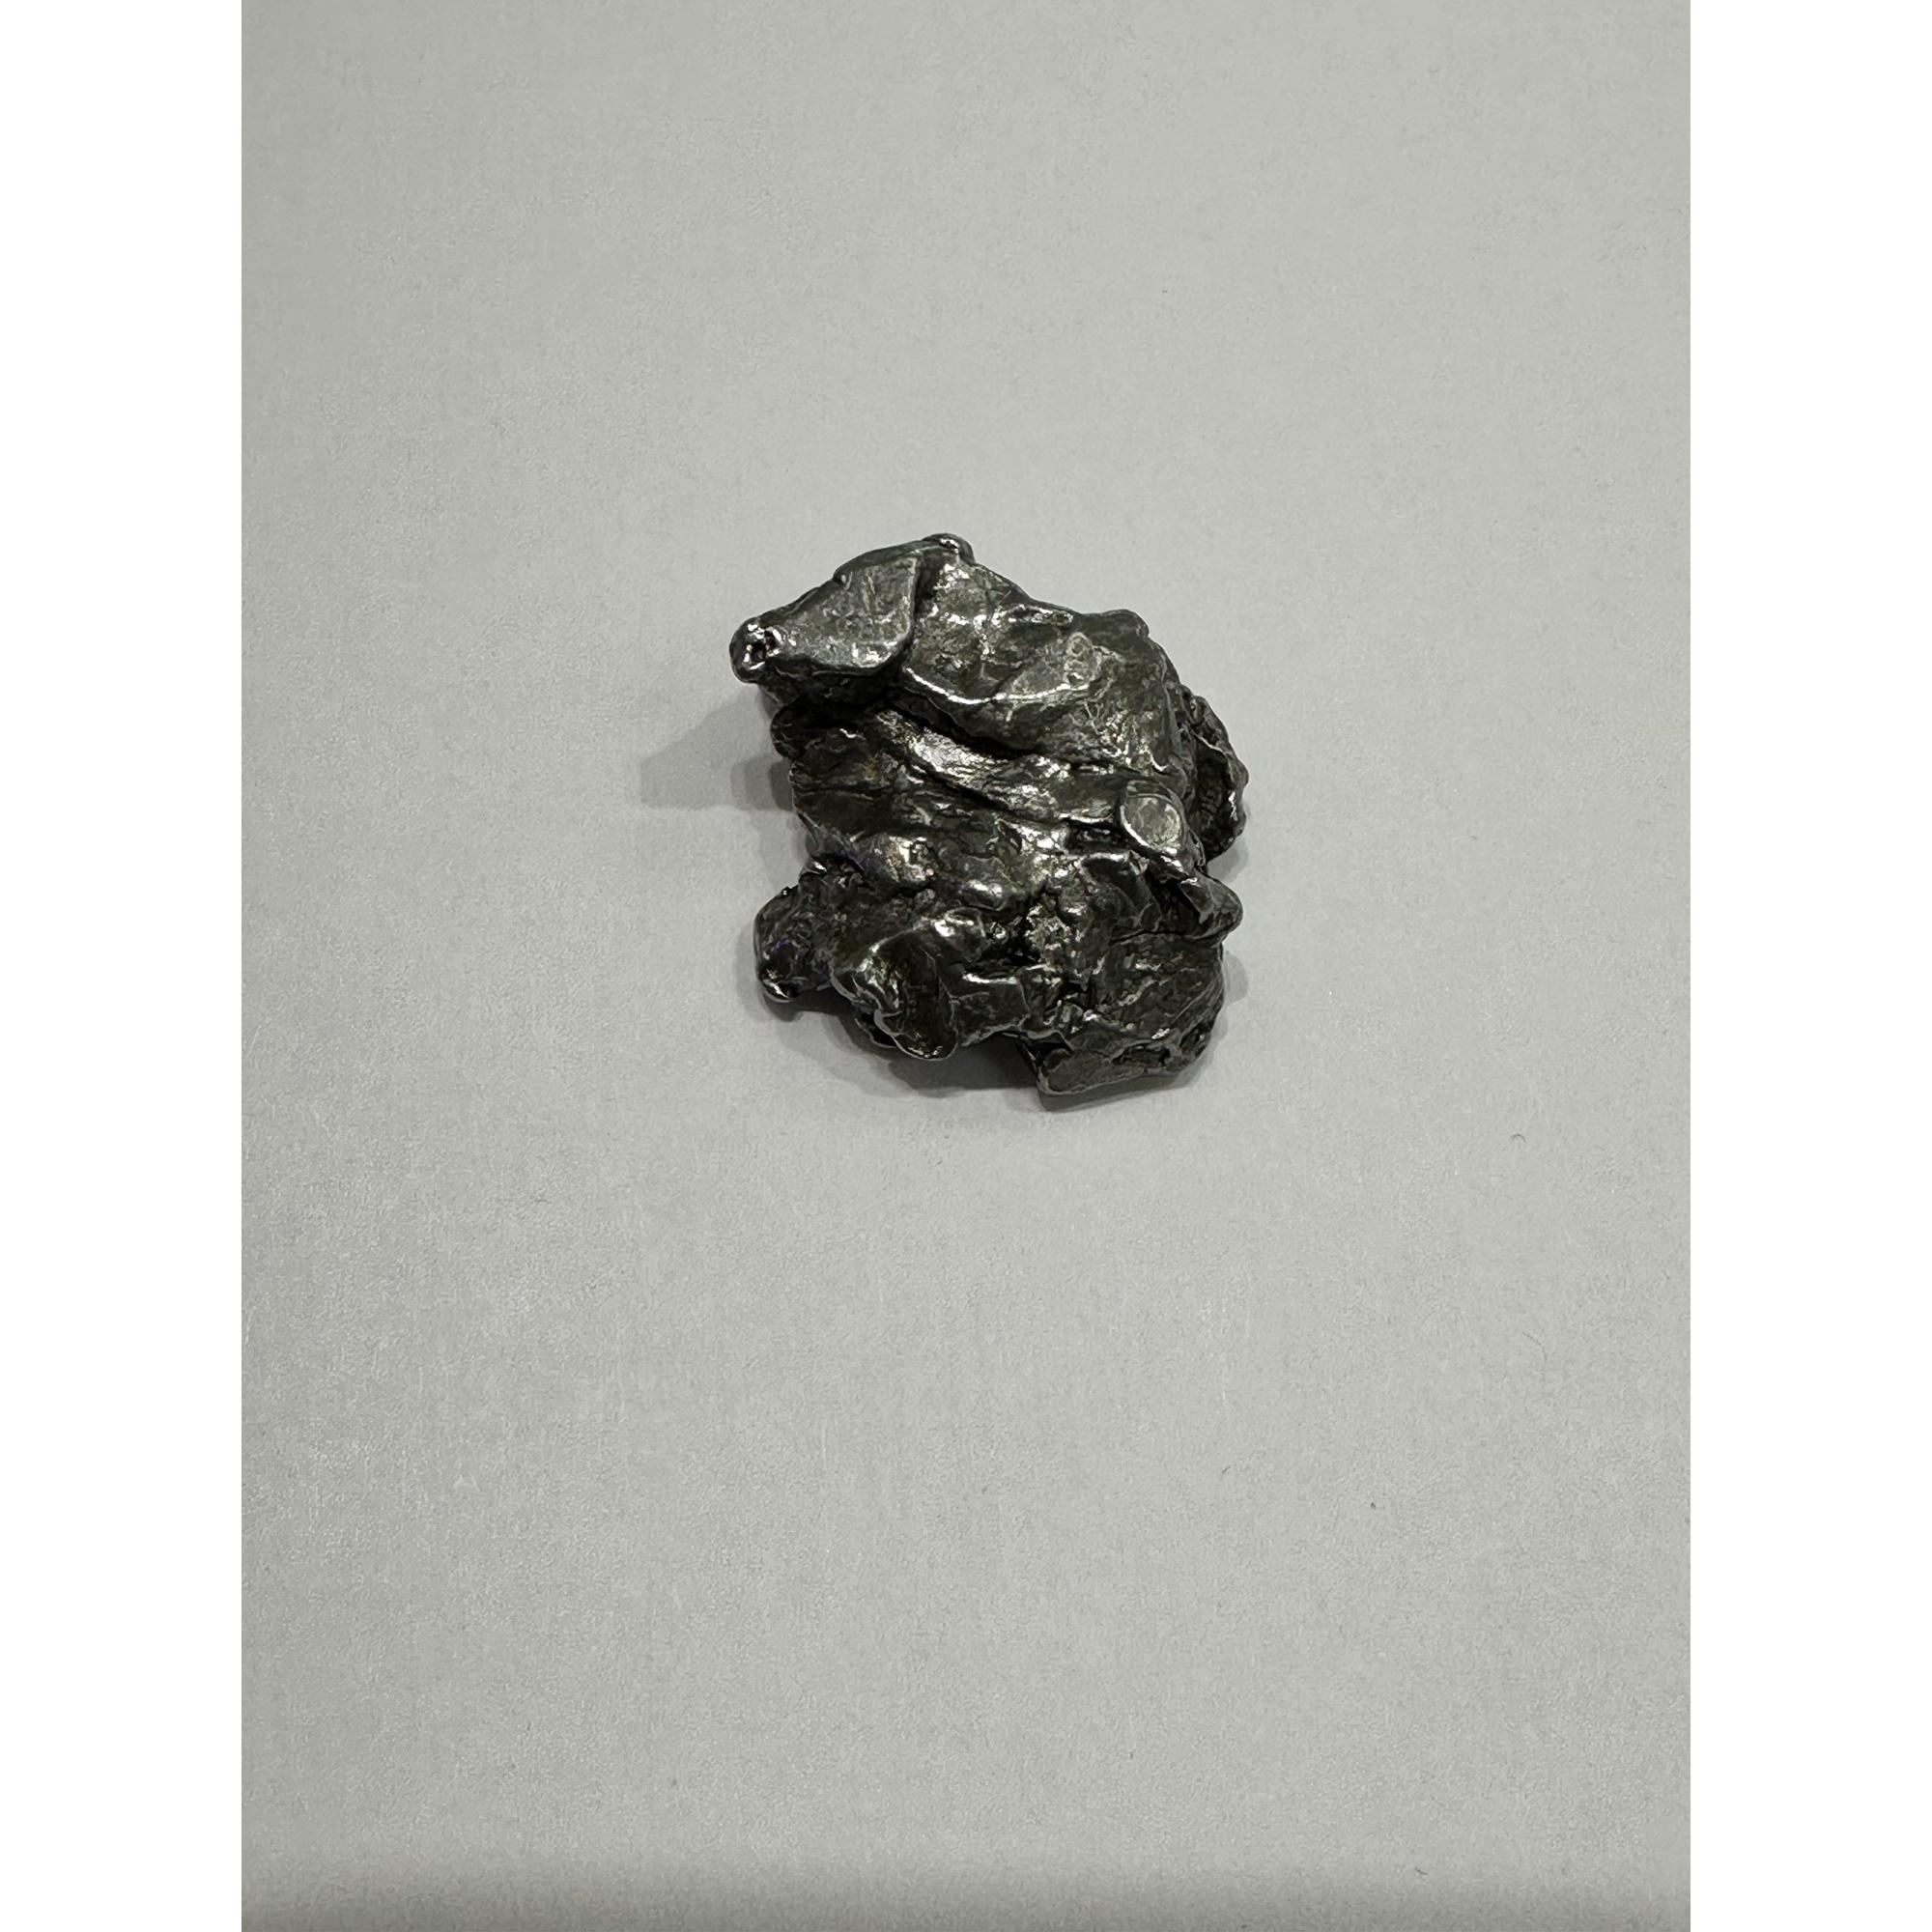 Campo de Cielo meteorite, beautiful 1 1/2 inch long Prehistoric Online